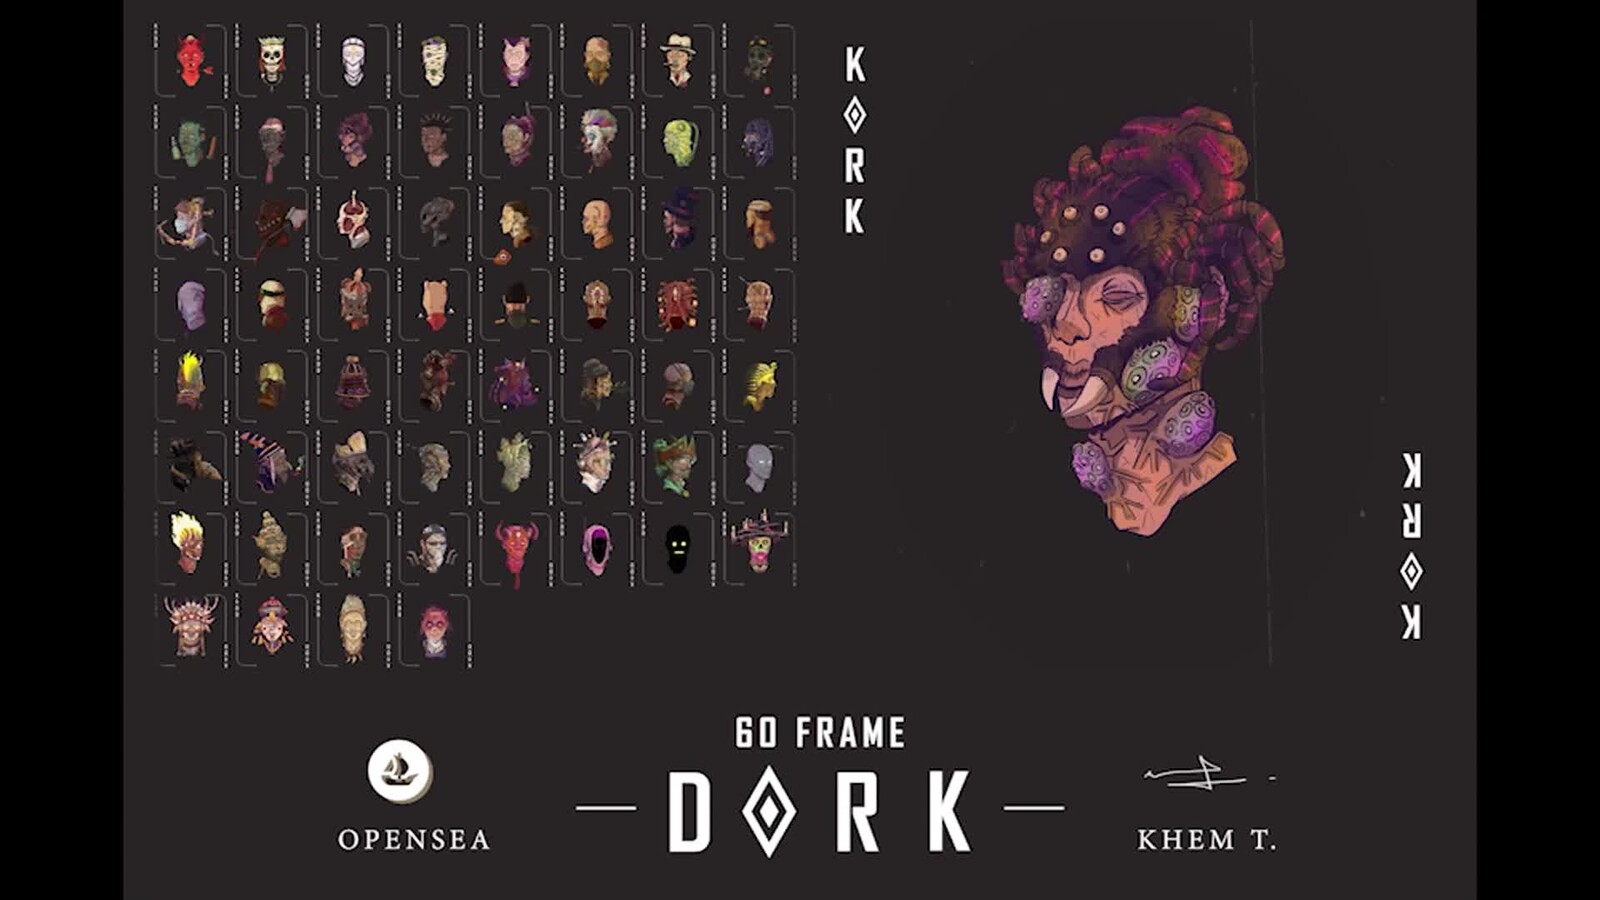 60 Frame Collection - Series "Dark" Theme